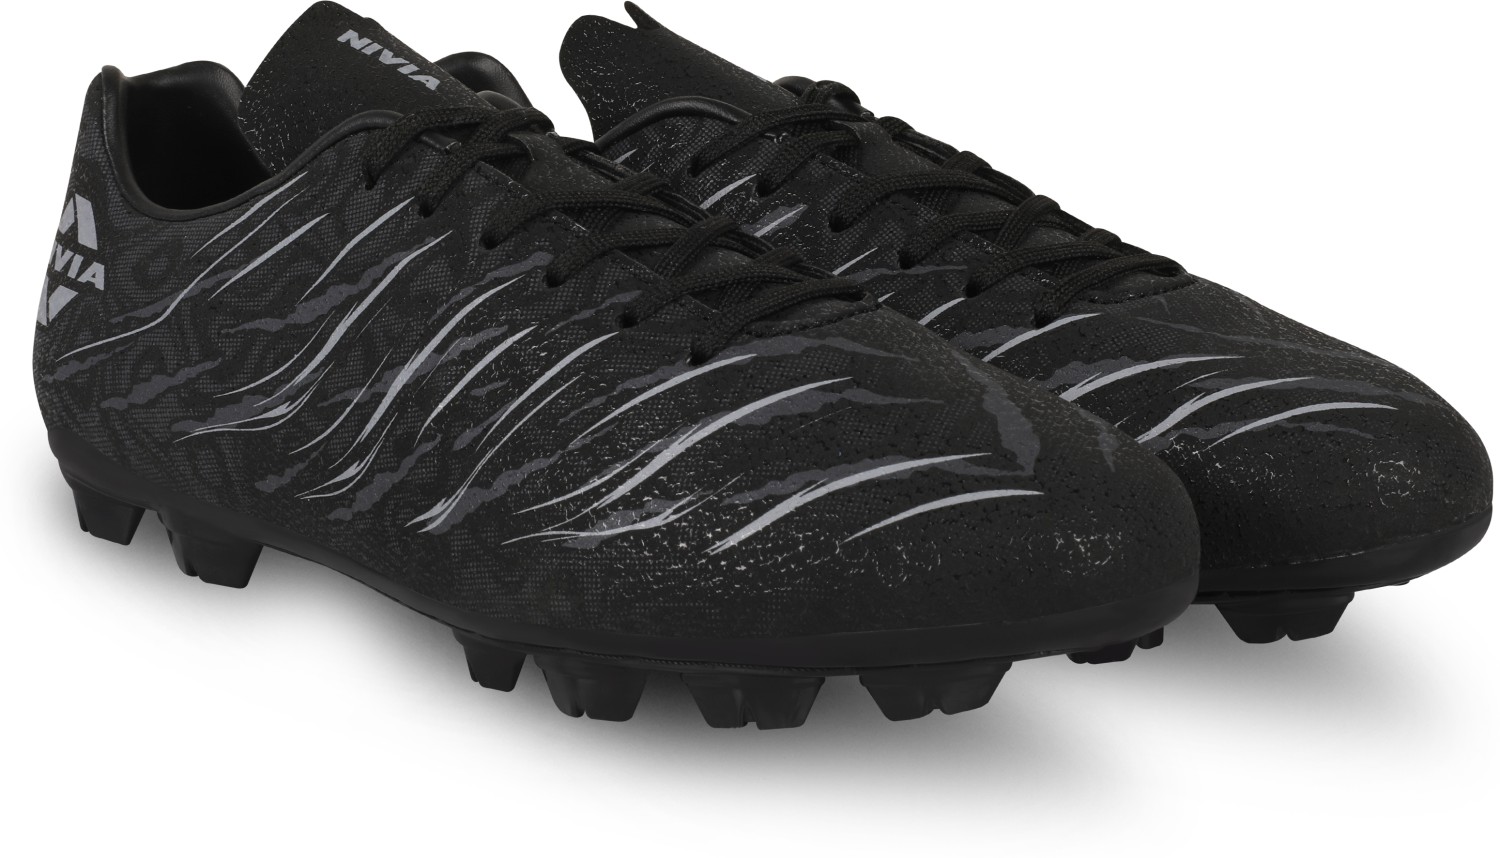 Buy Men's NIVIA Airstrike Black Football shoes Online | Centrepoint Qatar